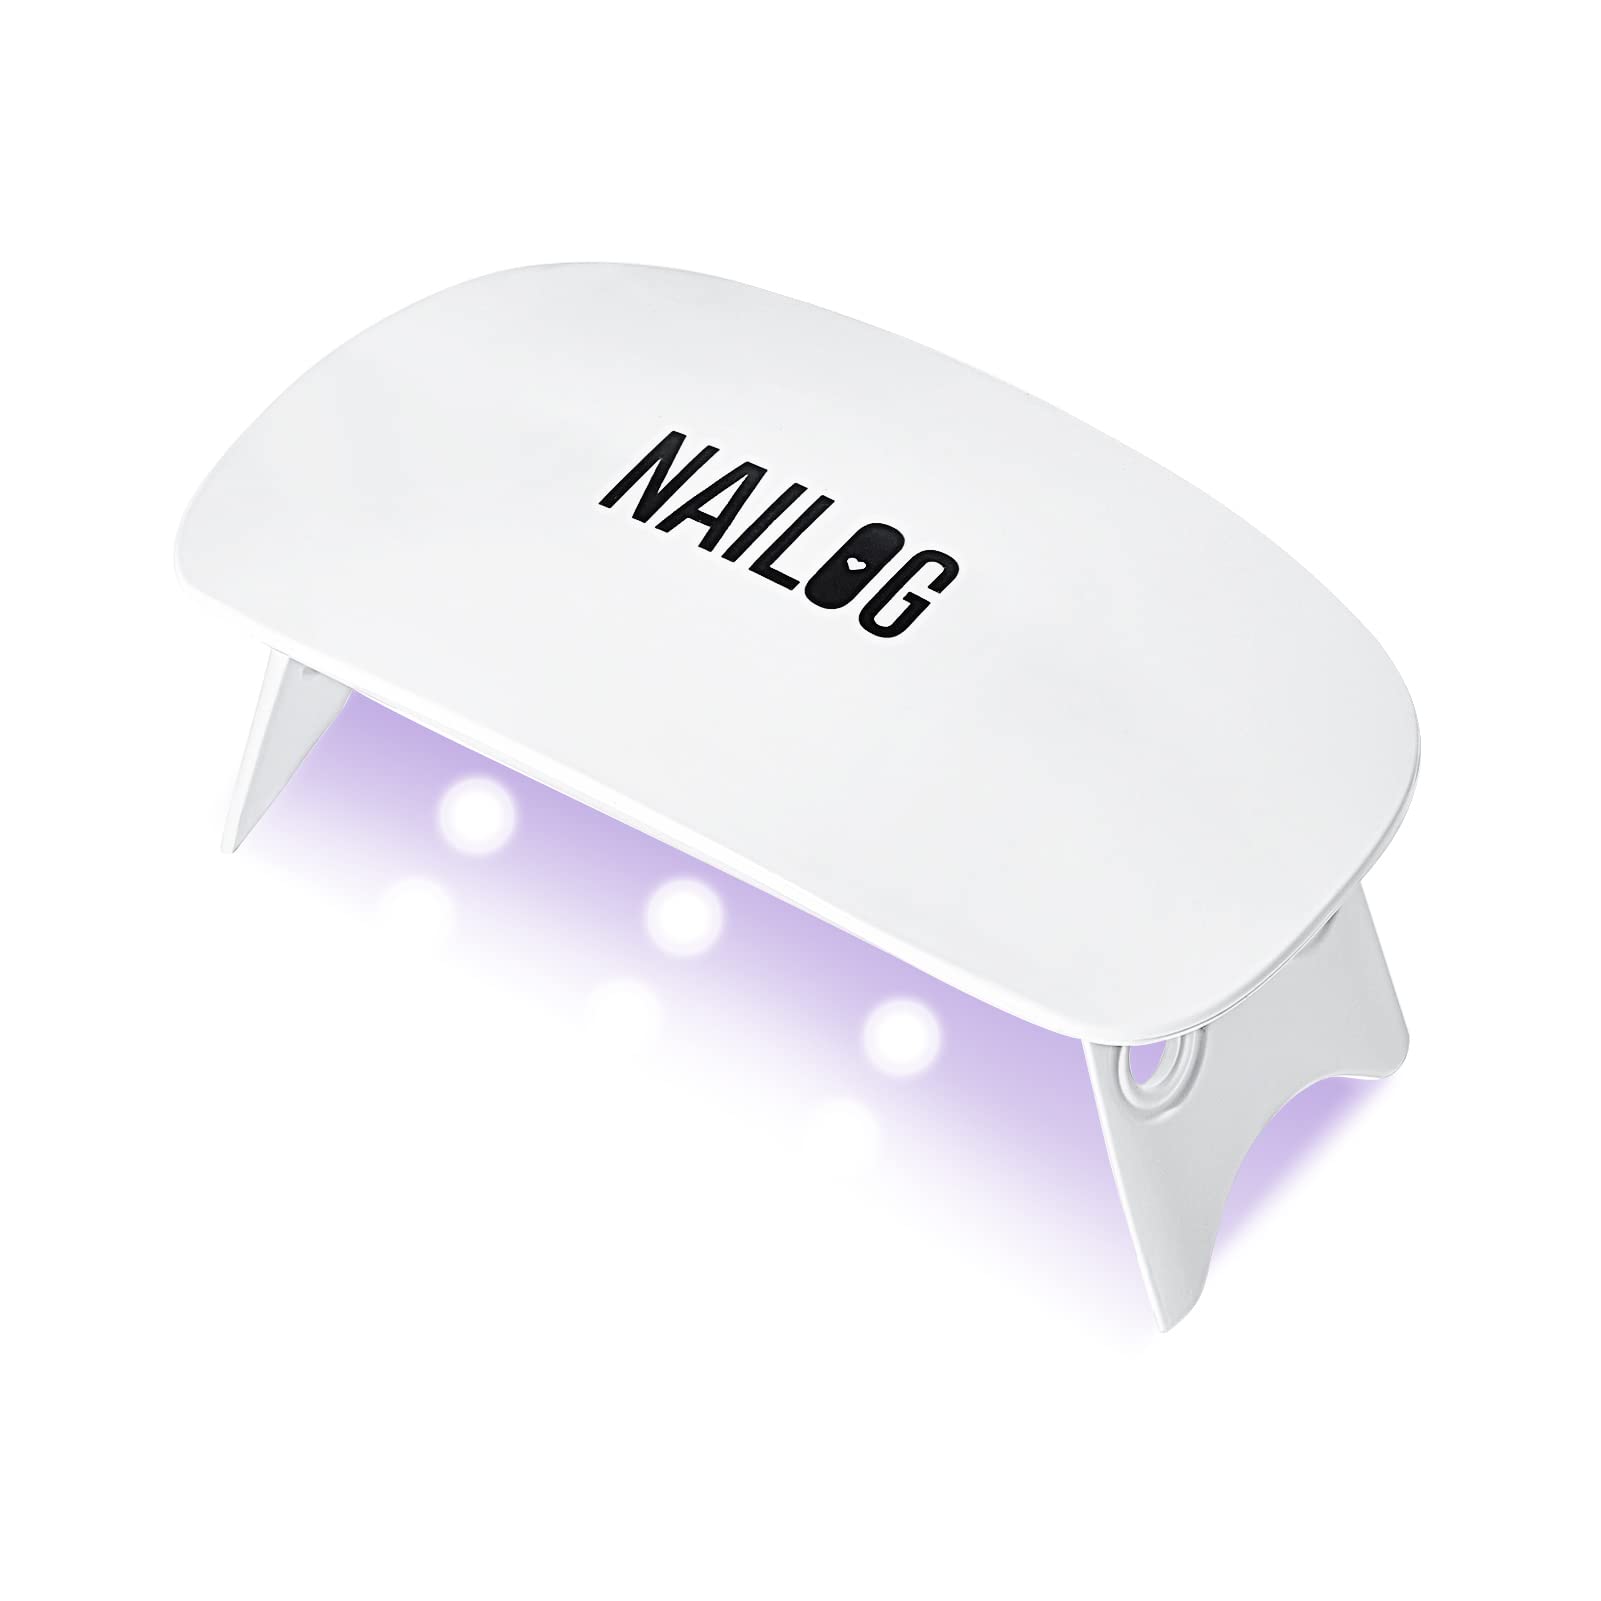 Portable Mini USB UV Lamp by SUNmini | 6W LED Ultraviolet Light | UV Resin  Tool | Nail Dryer